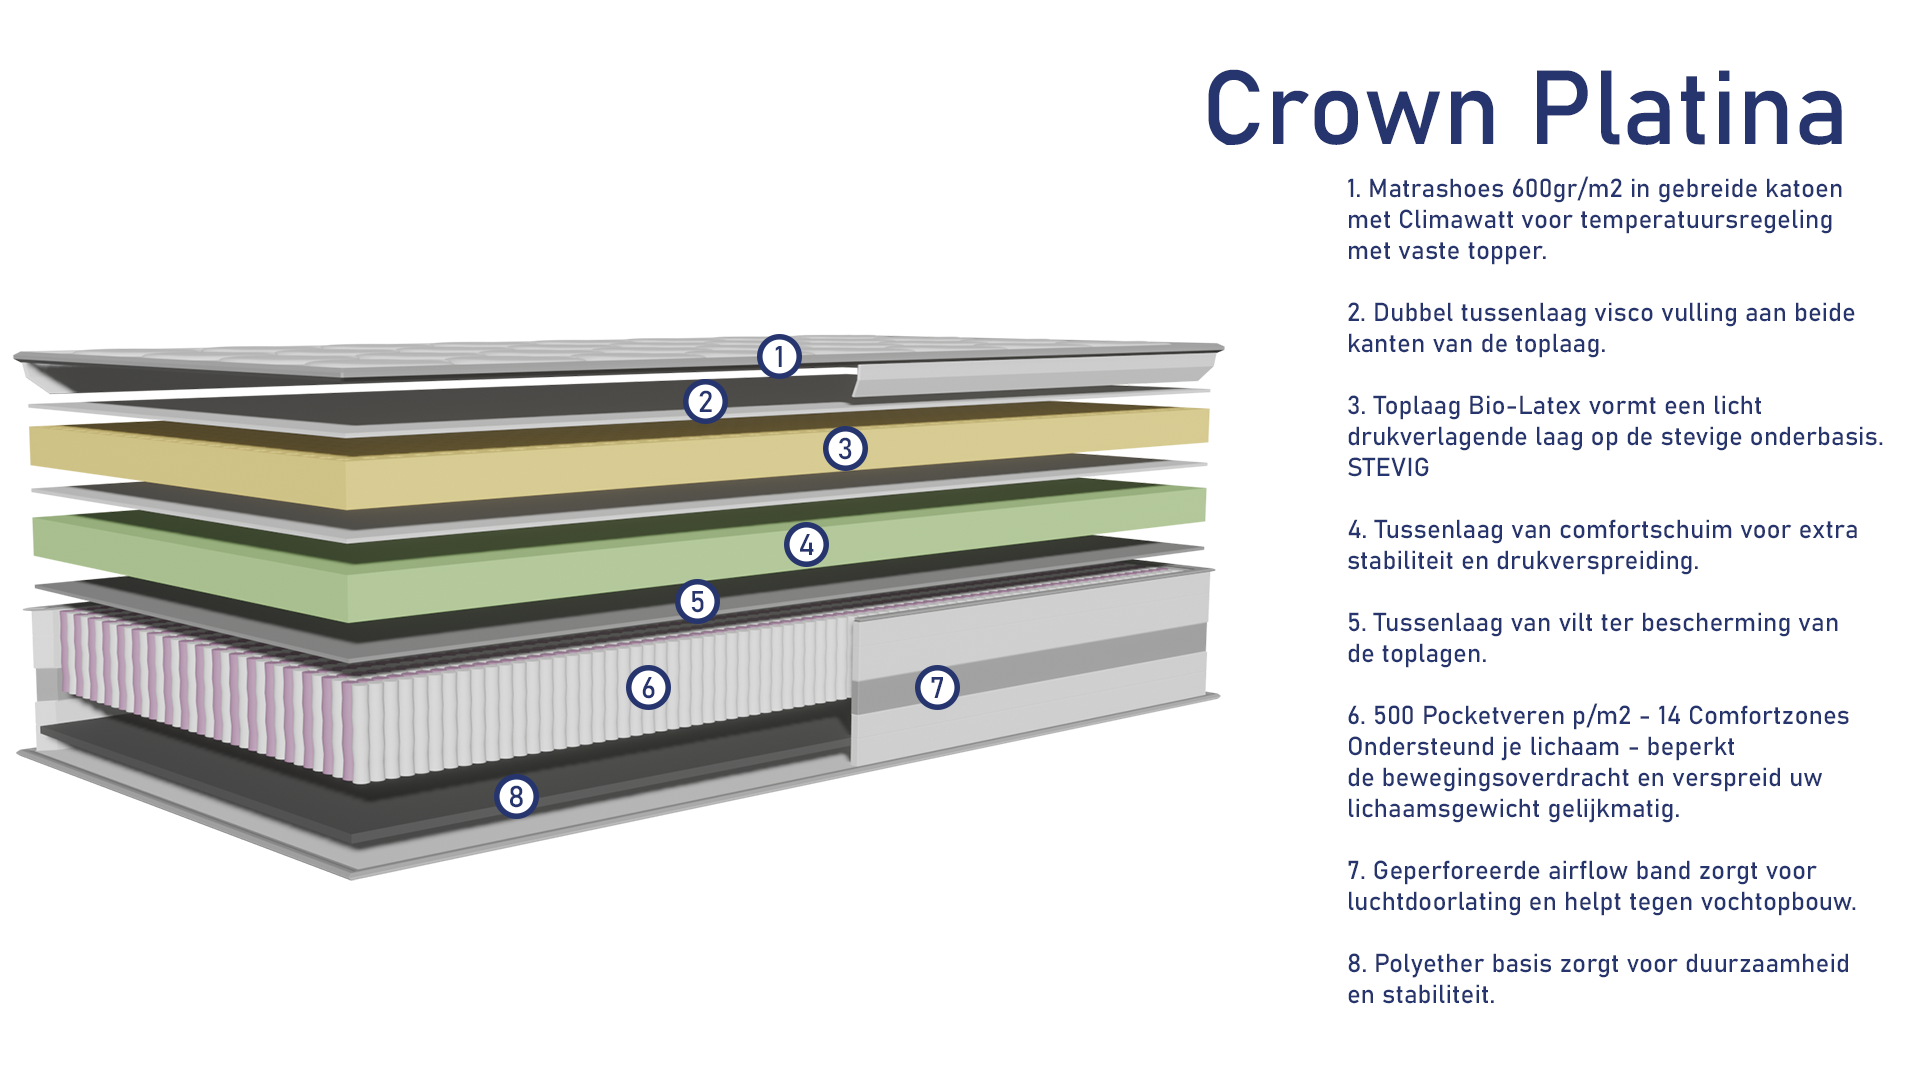 Crown Platina - Uitleg.png